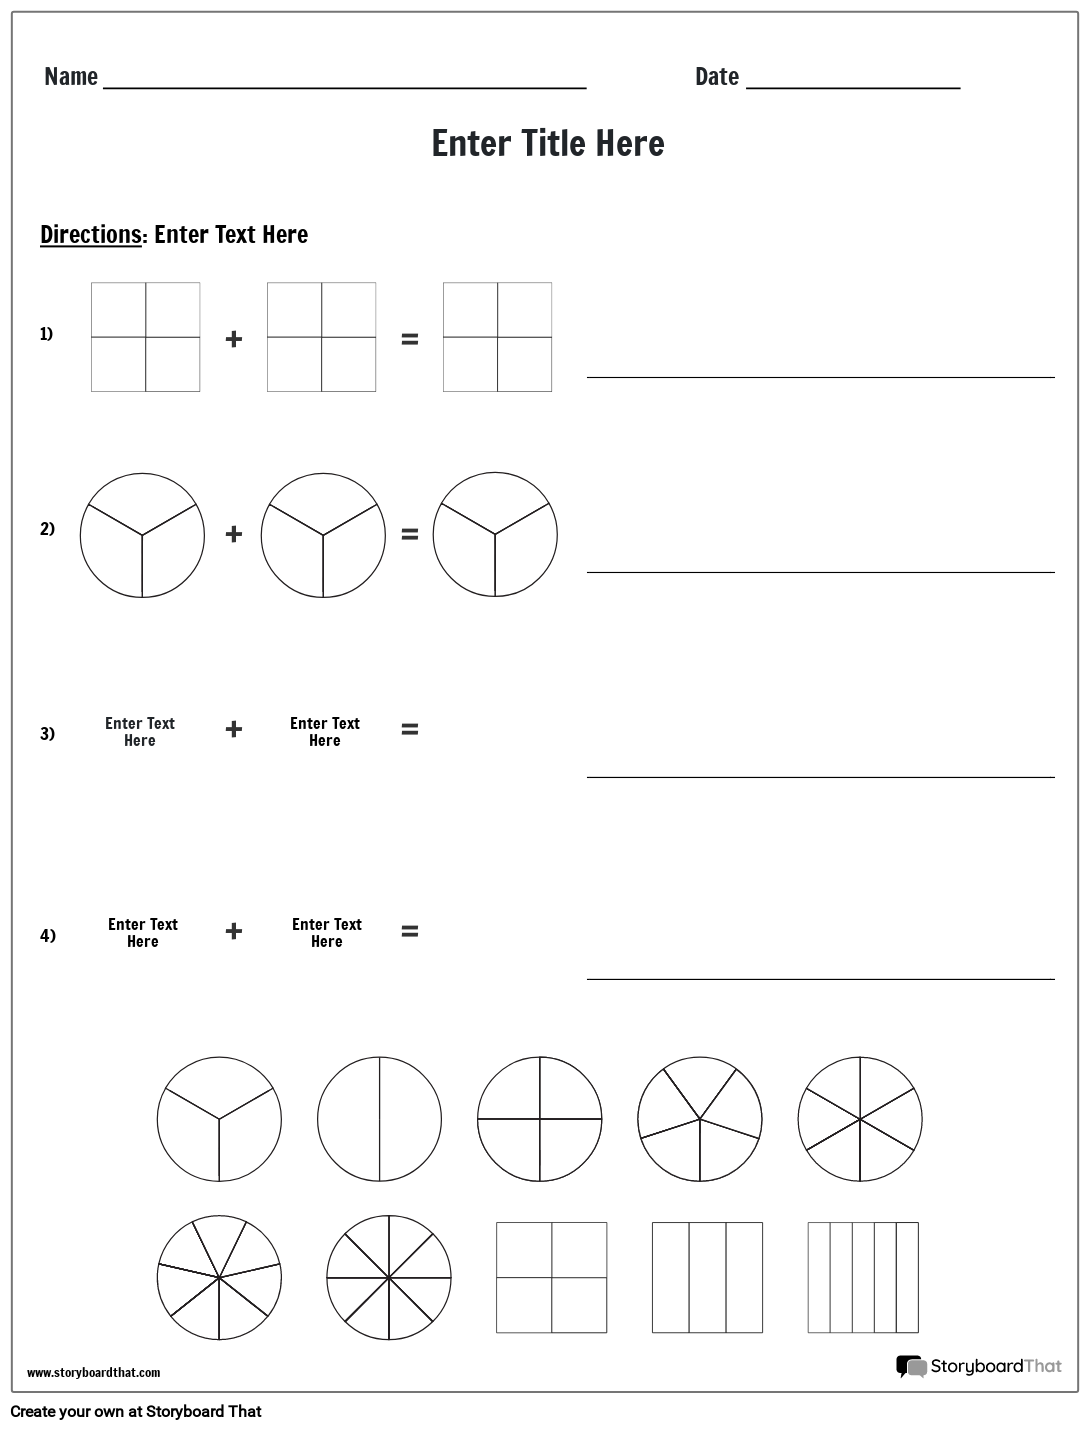 Adding Fractions Template Siu etin s Linijos Iki Worksheet templates